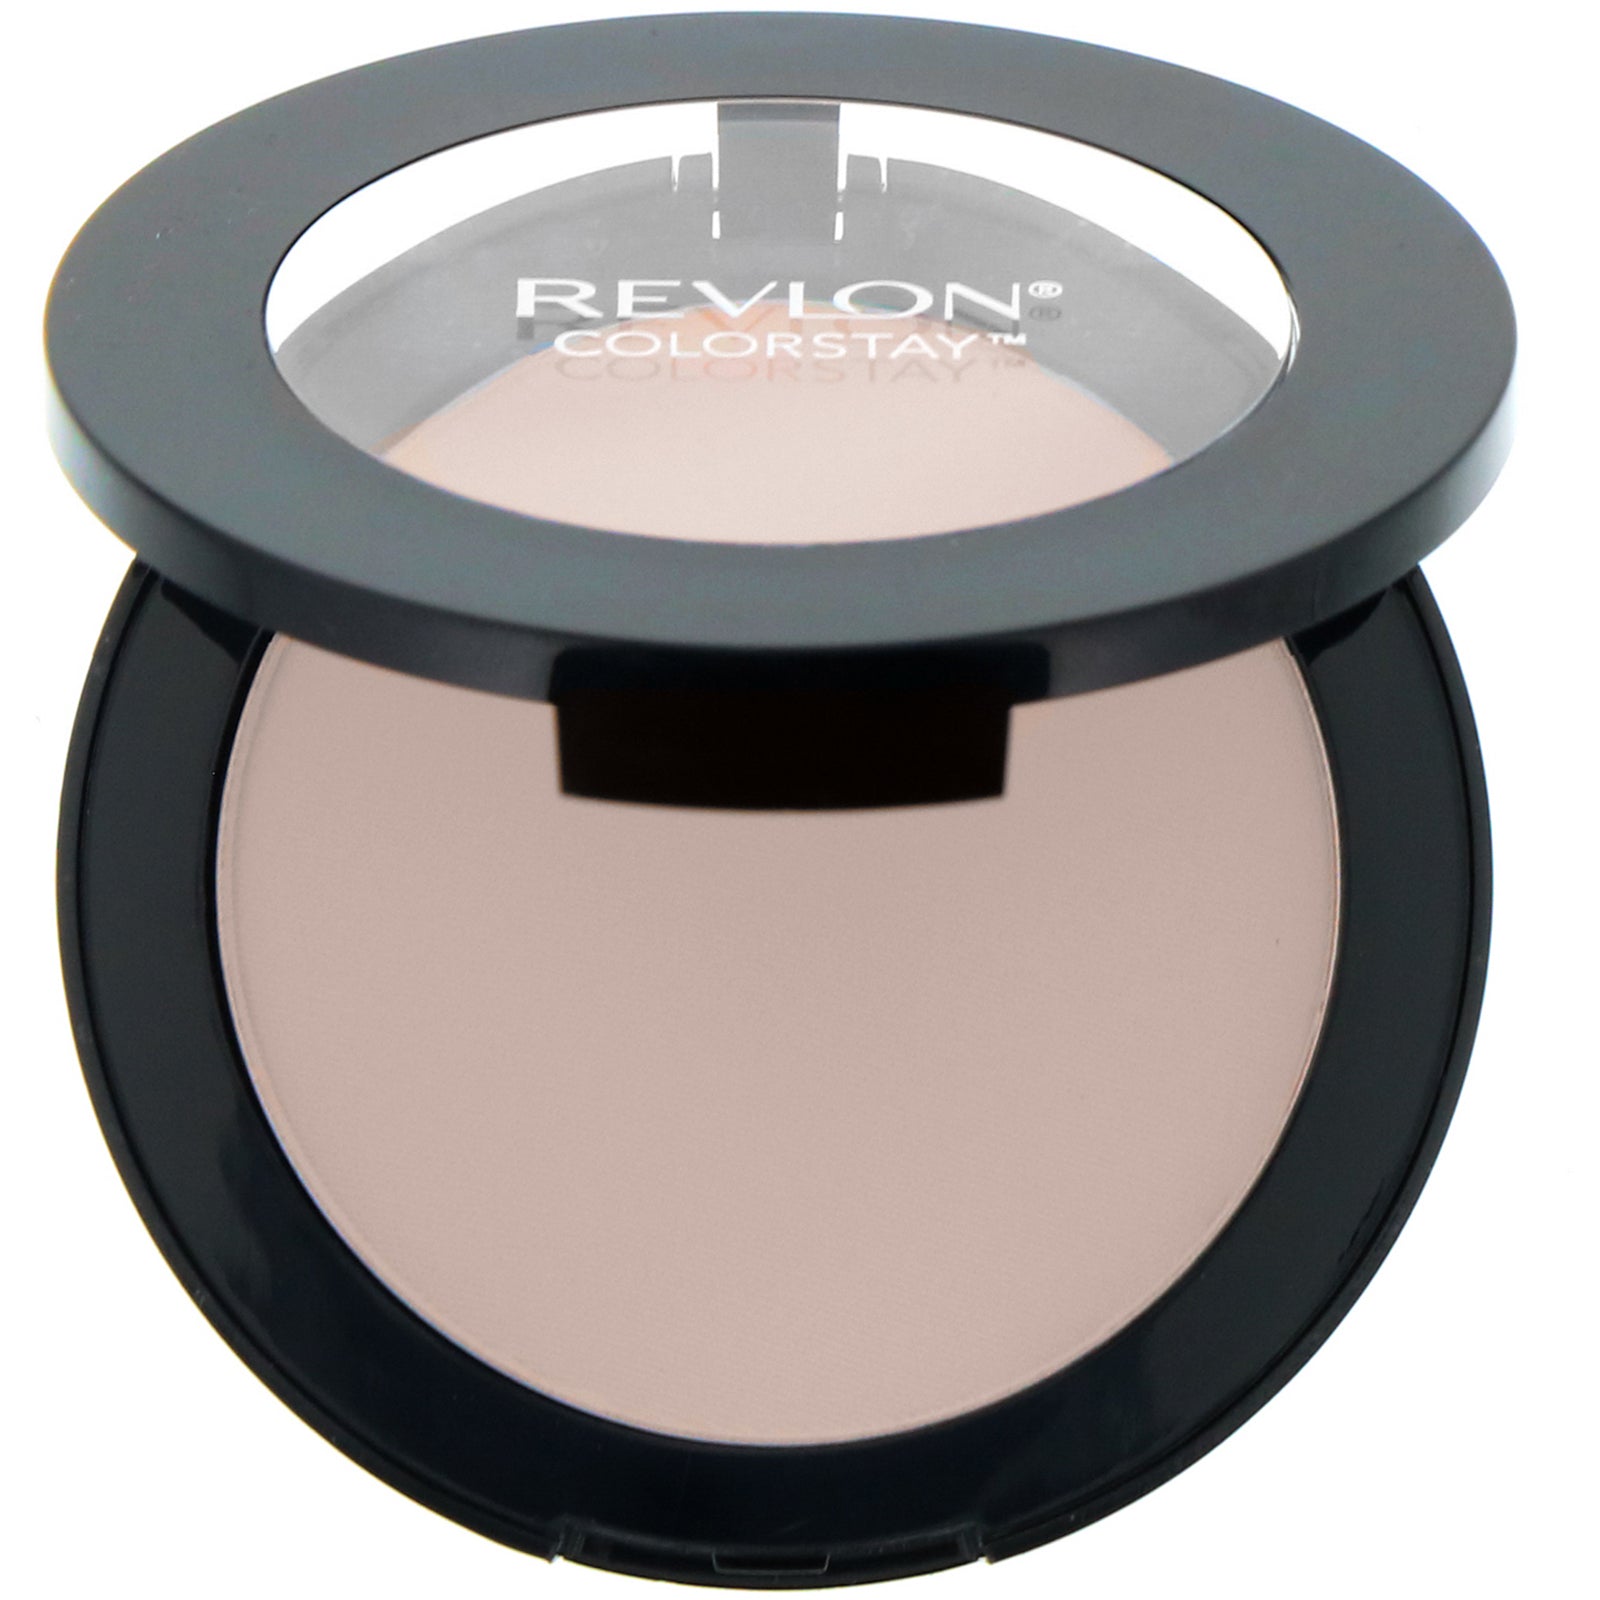 Revlon, Colorstay, Finishing Powder, 880 Translucent, 0.3 oz (8.4 g)